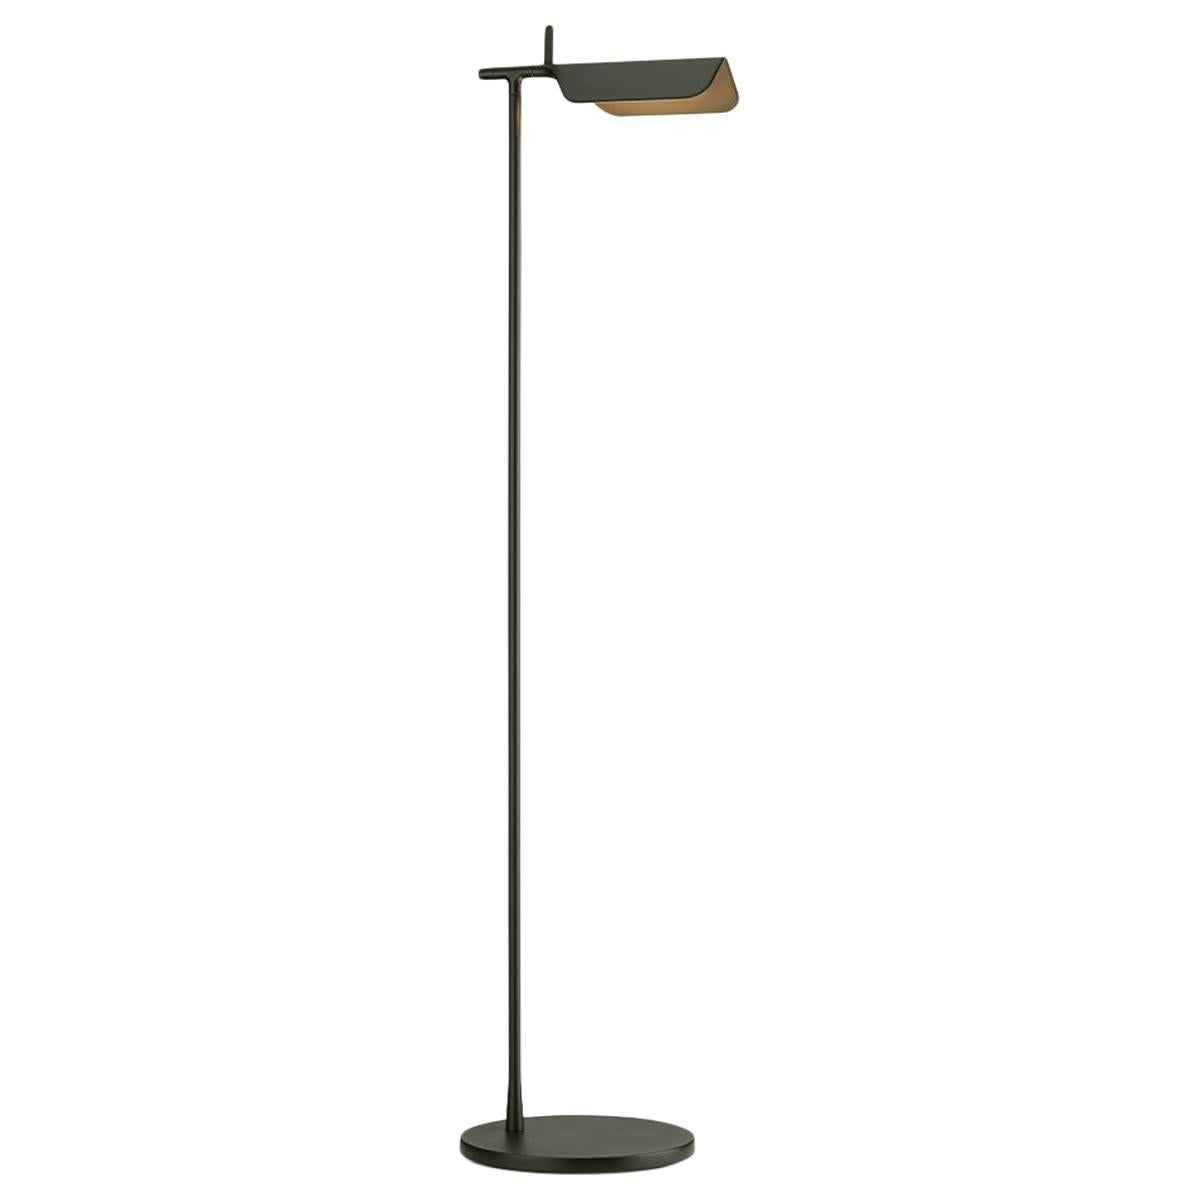 For Sale: Green (Matte Green) Flos Tab 2700K LED Floor Lamp in Aluminum, by Edward Barber & Jay Osgerby